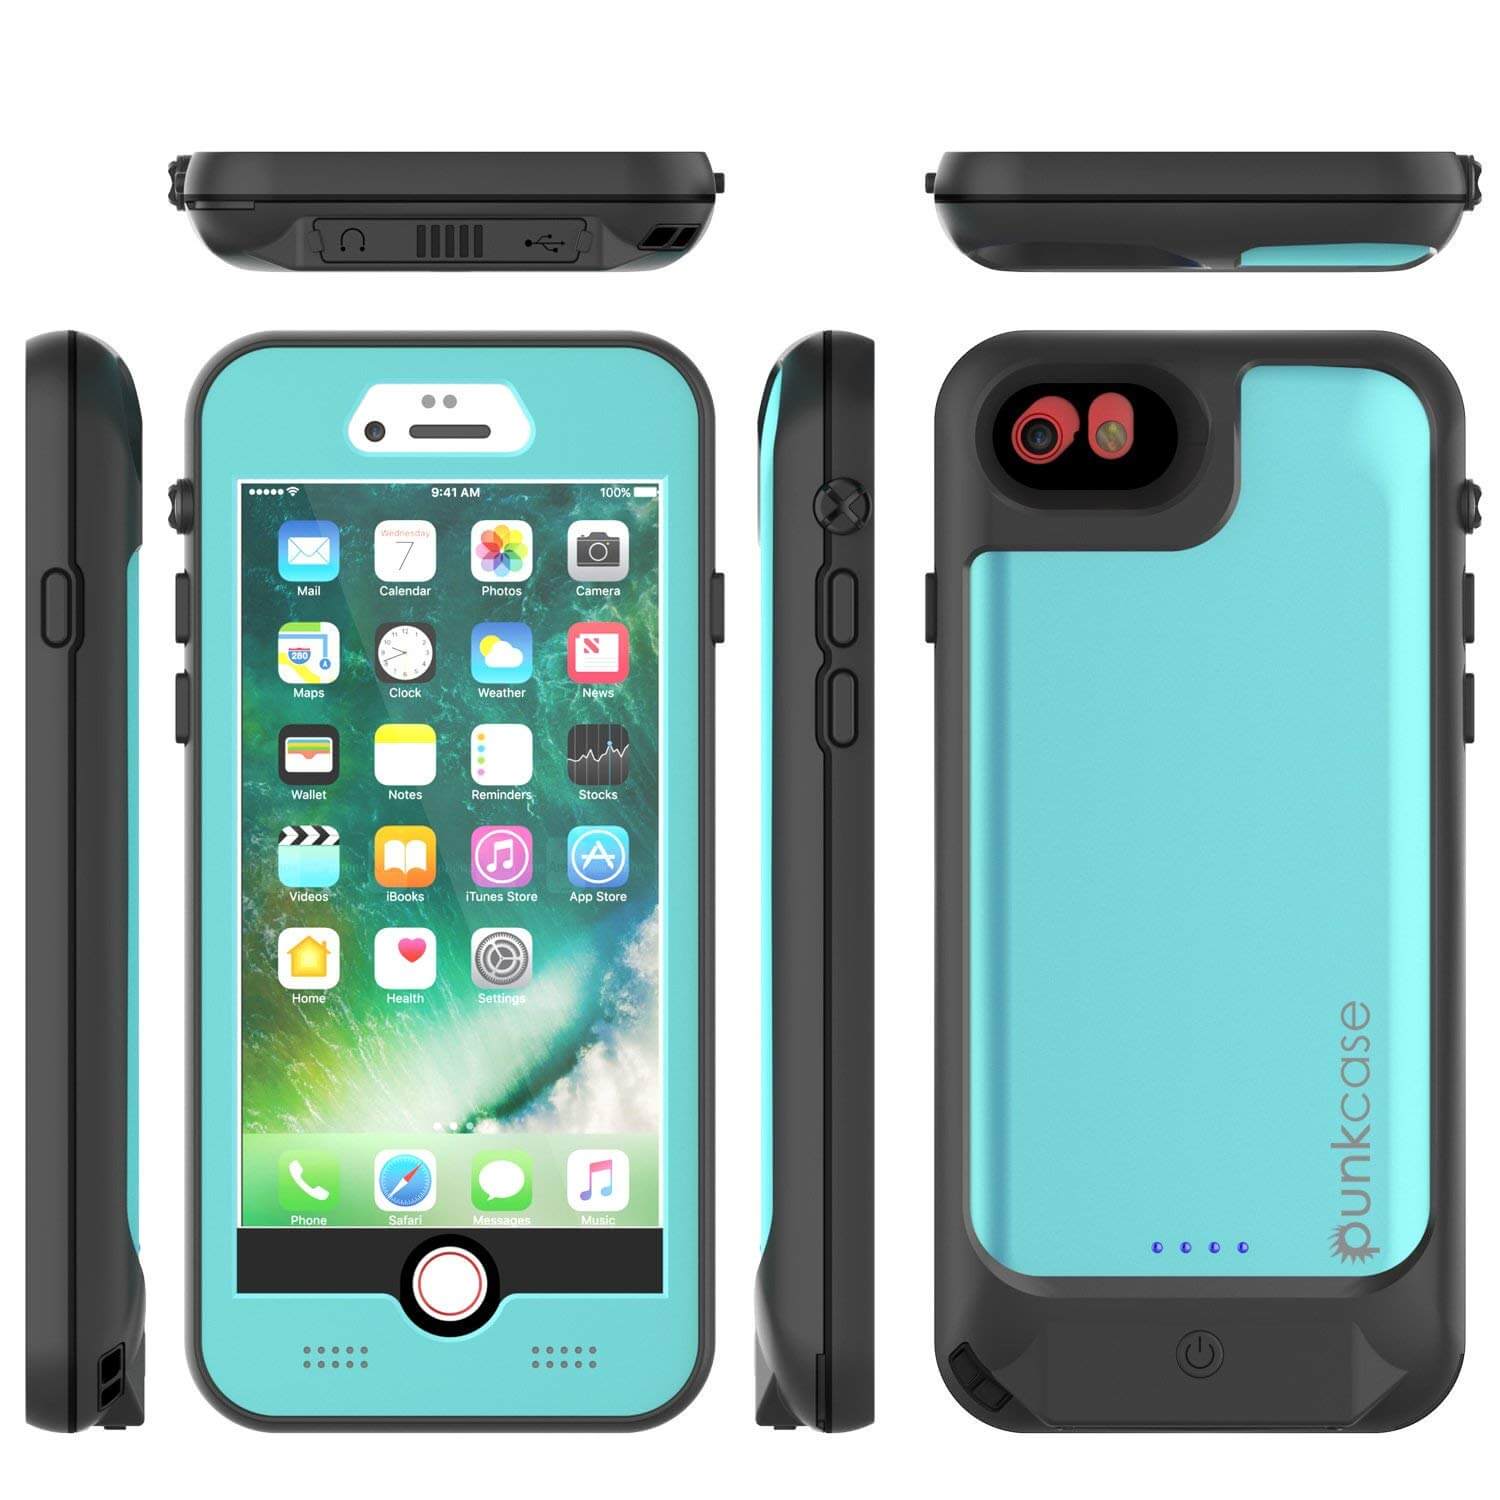 iPhone 6/6s Battery Case PunkJuice  - Waterproof Slim Portable Power Juice Bank with 2750mAh High Capacity (Teal)